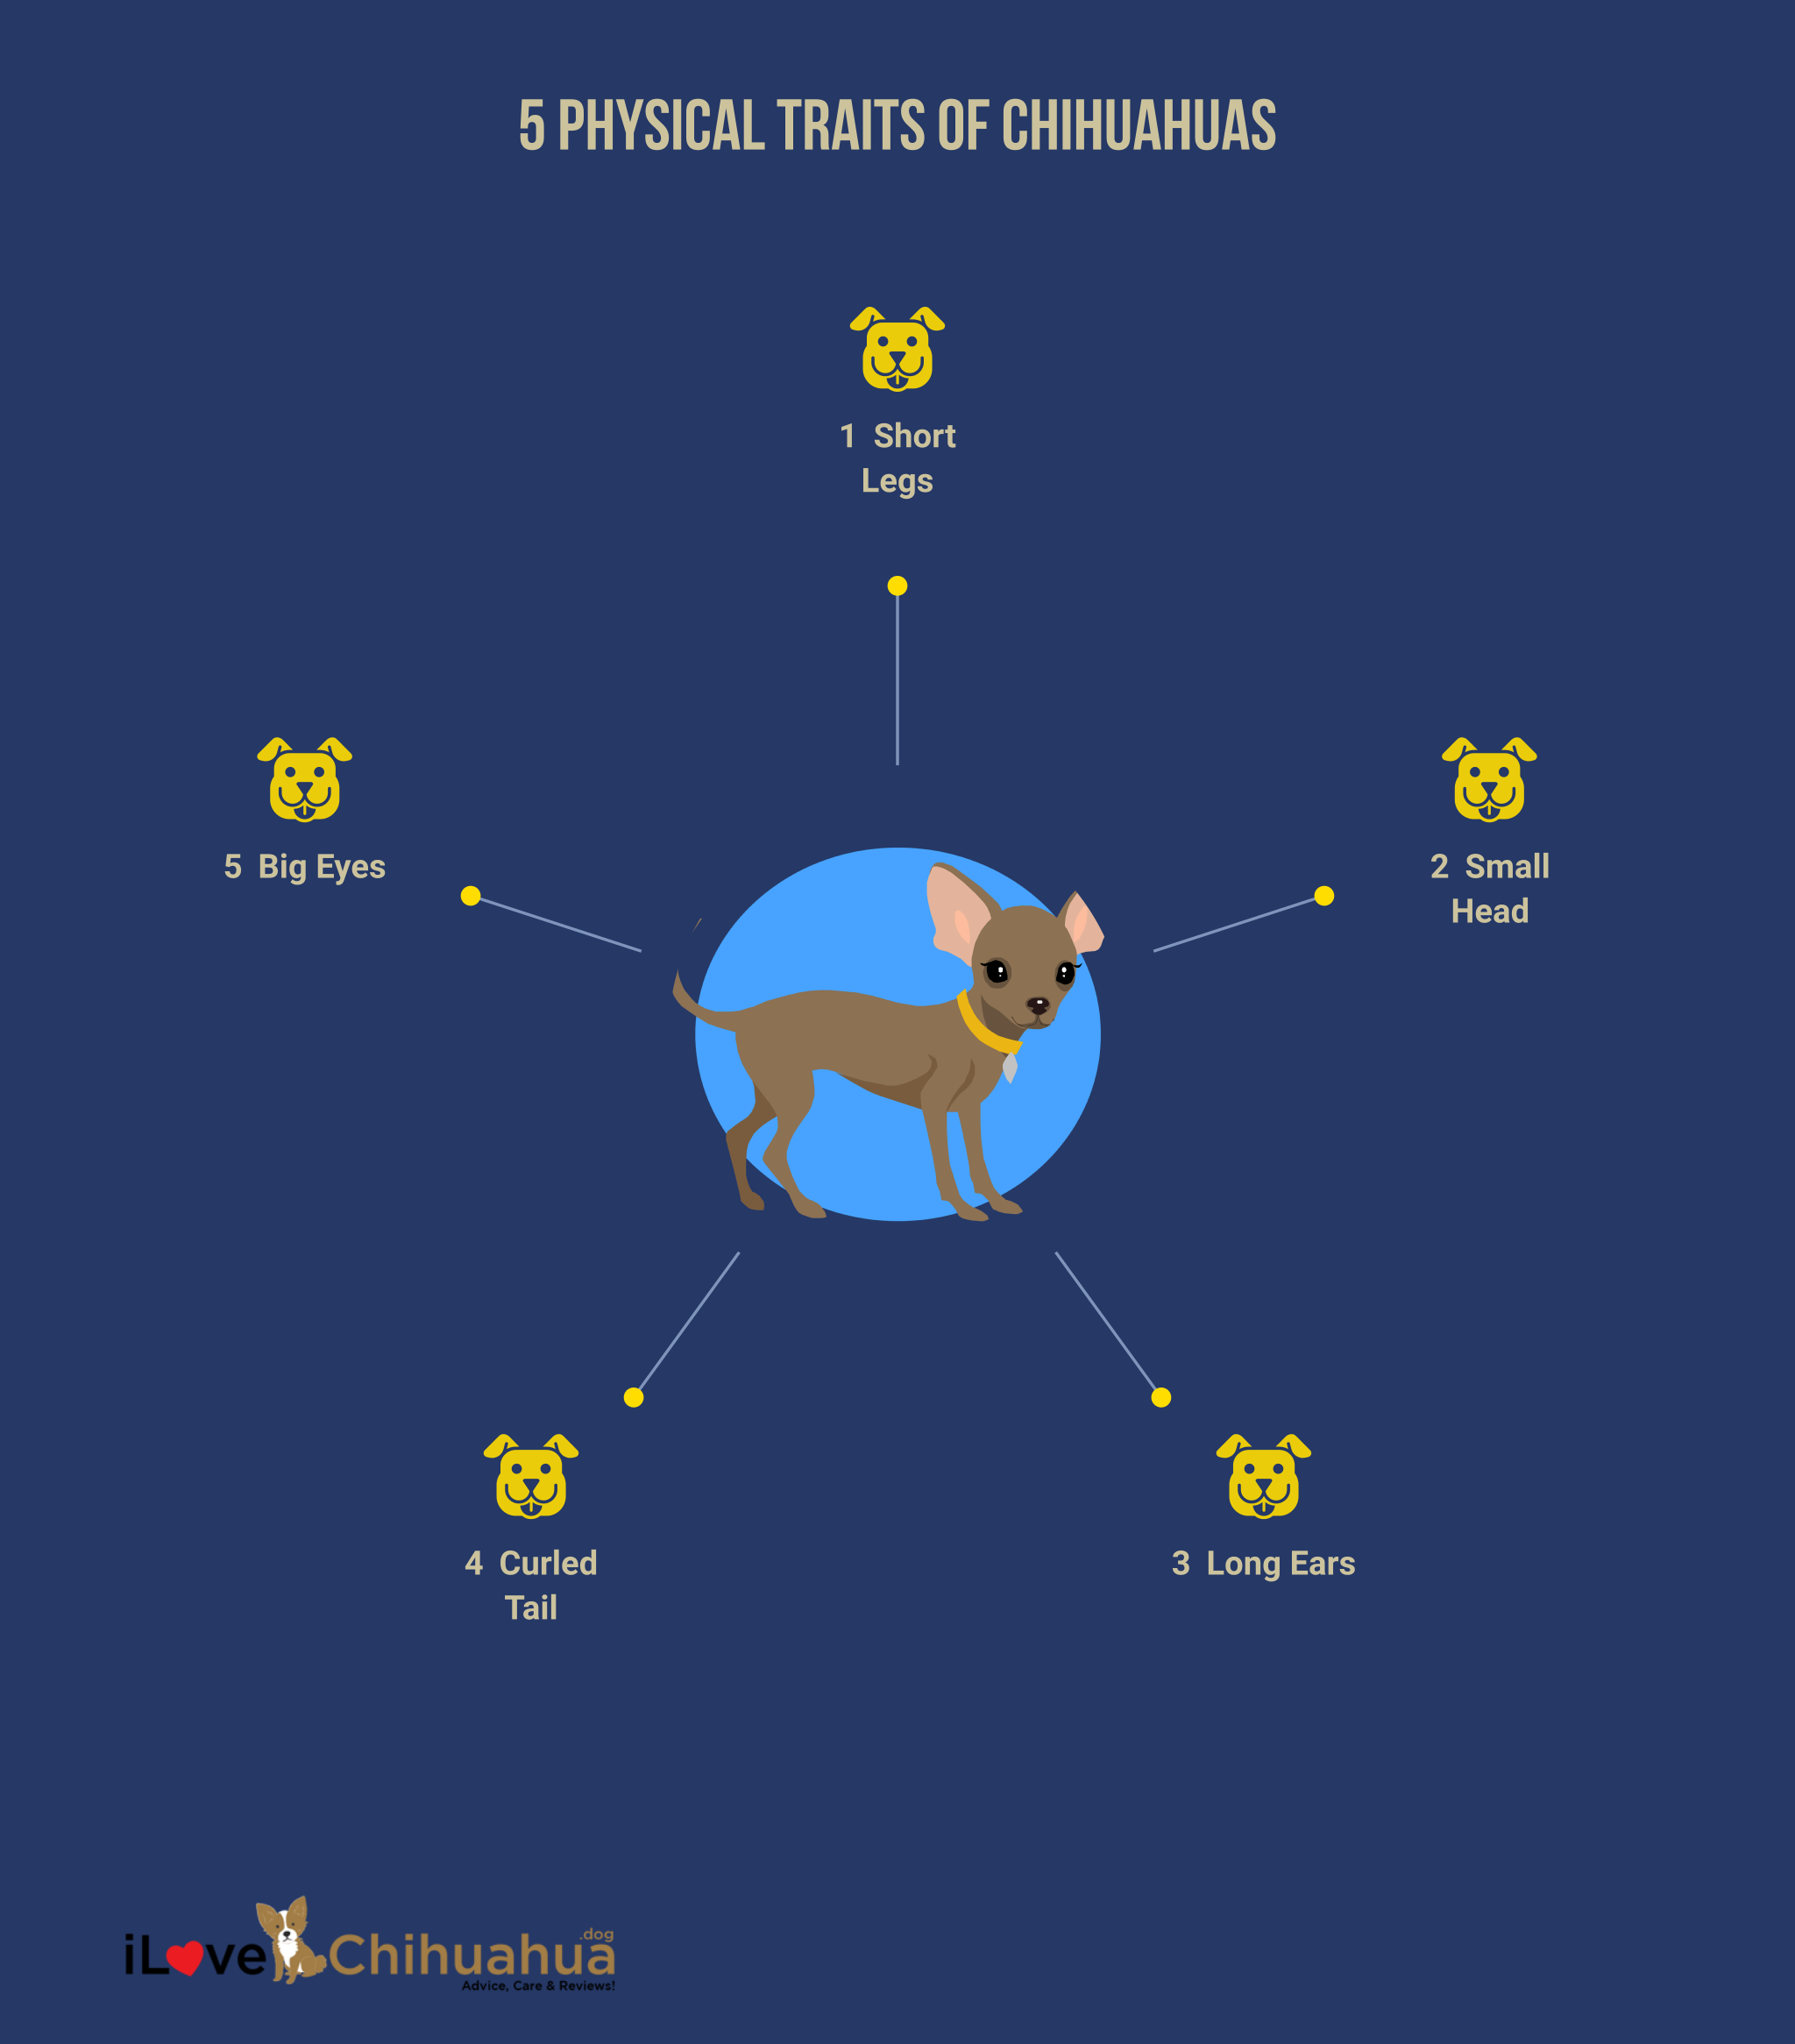 Physical Traits of Chihuahuas